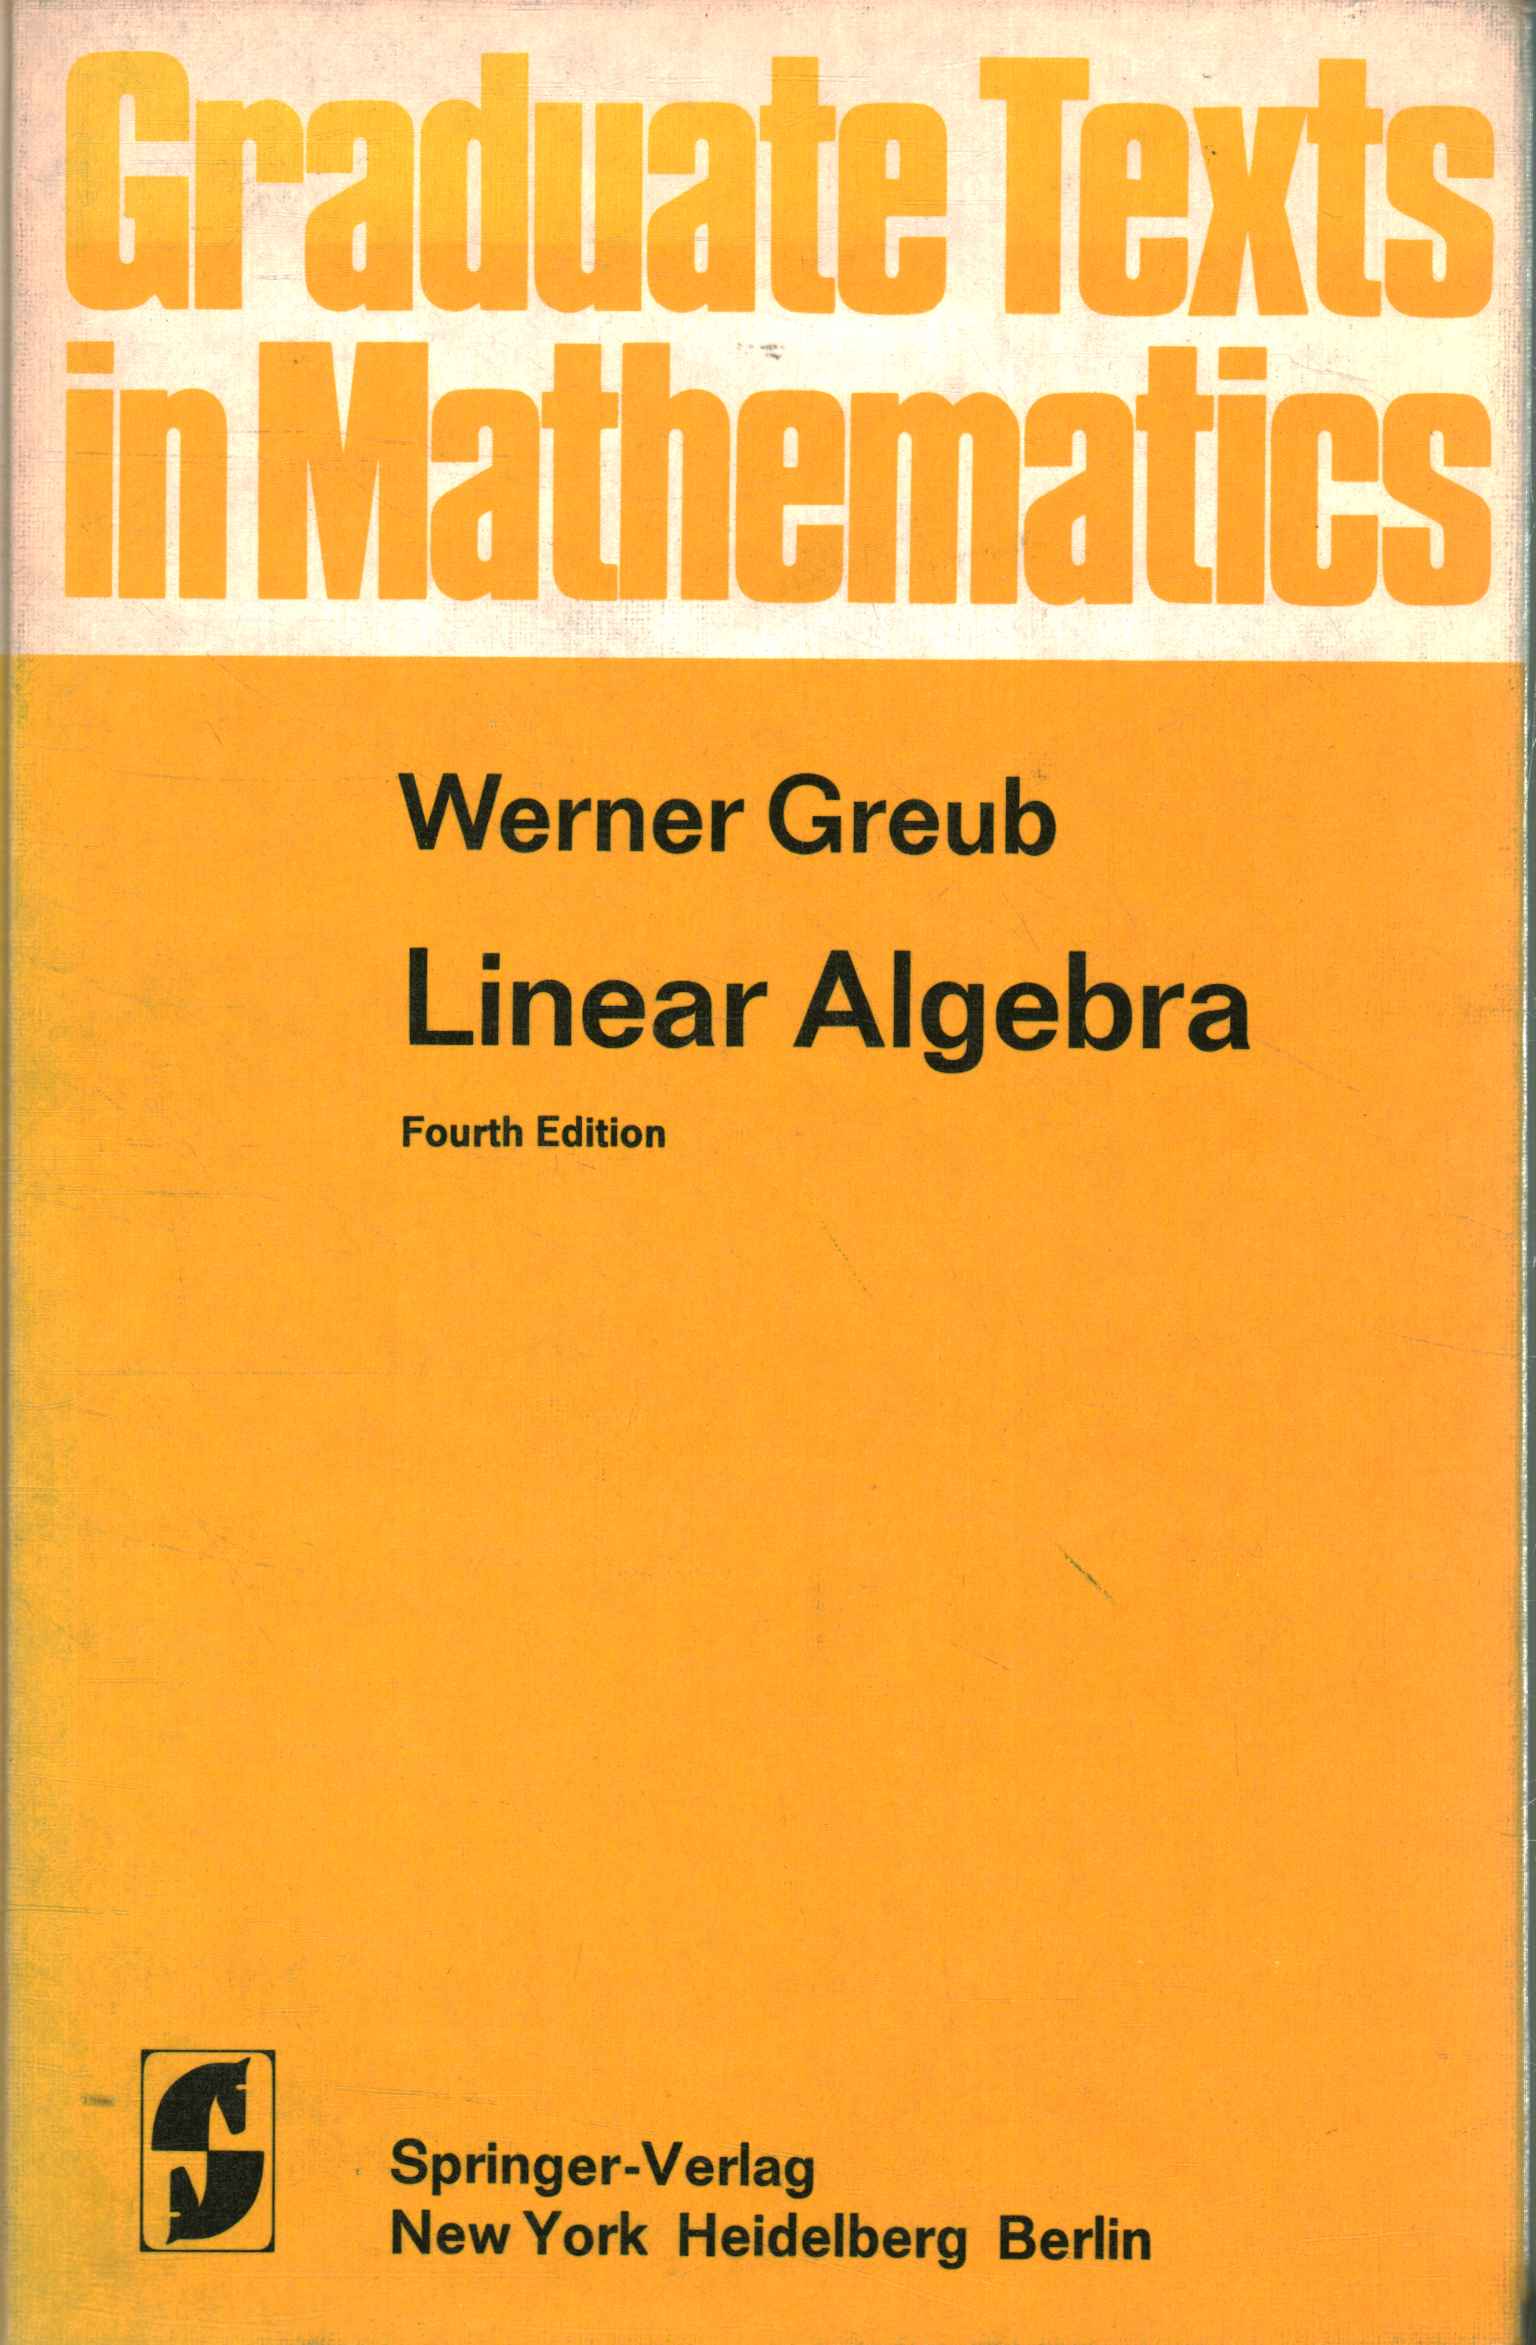 Álgebra lineal